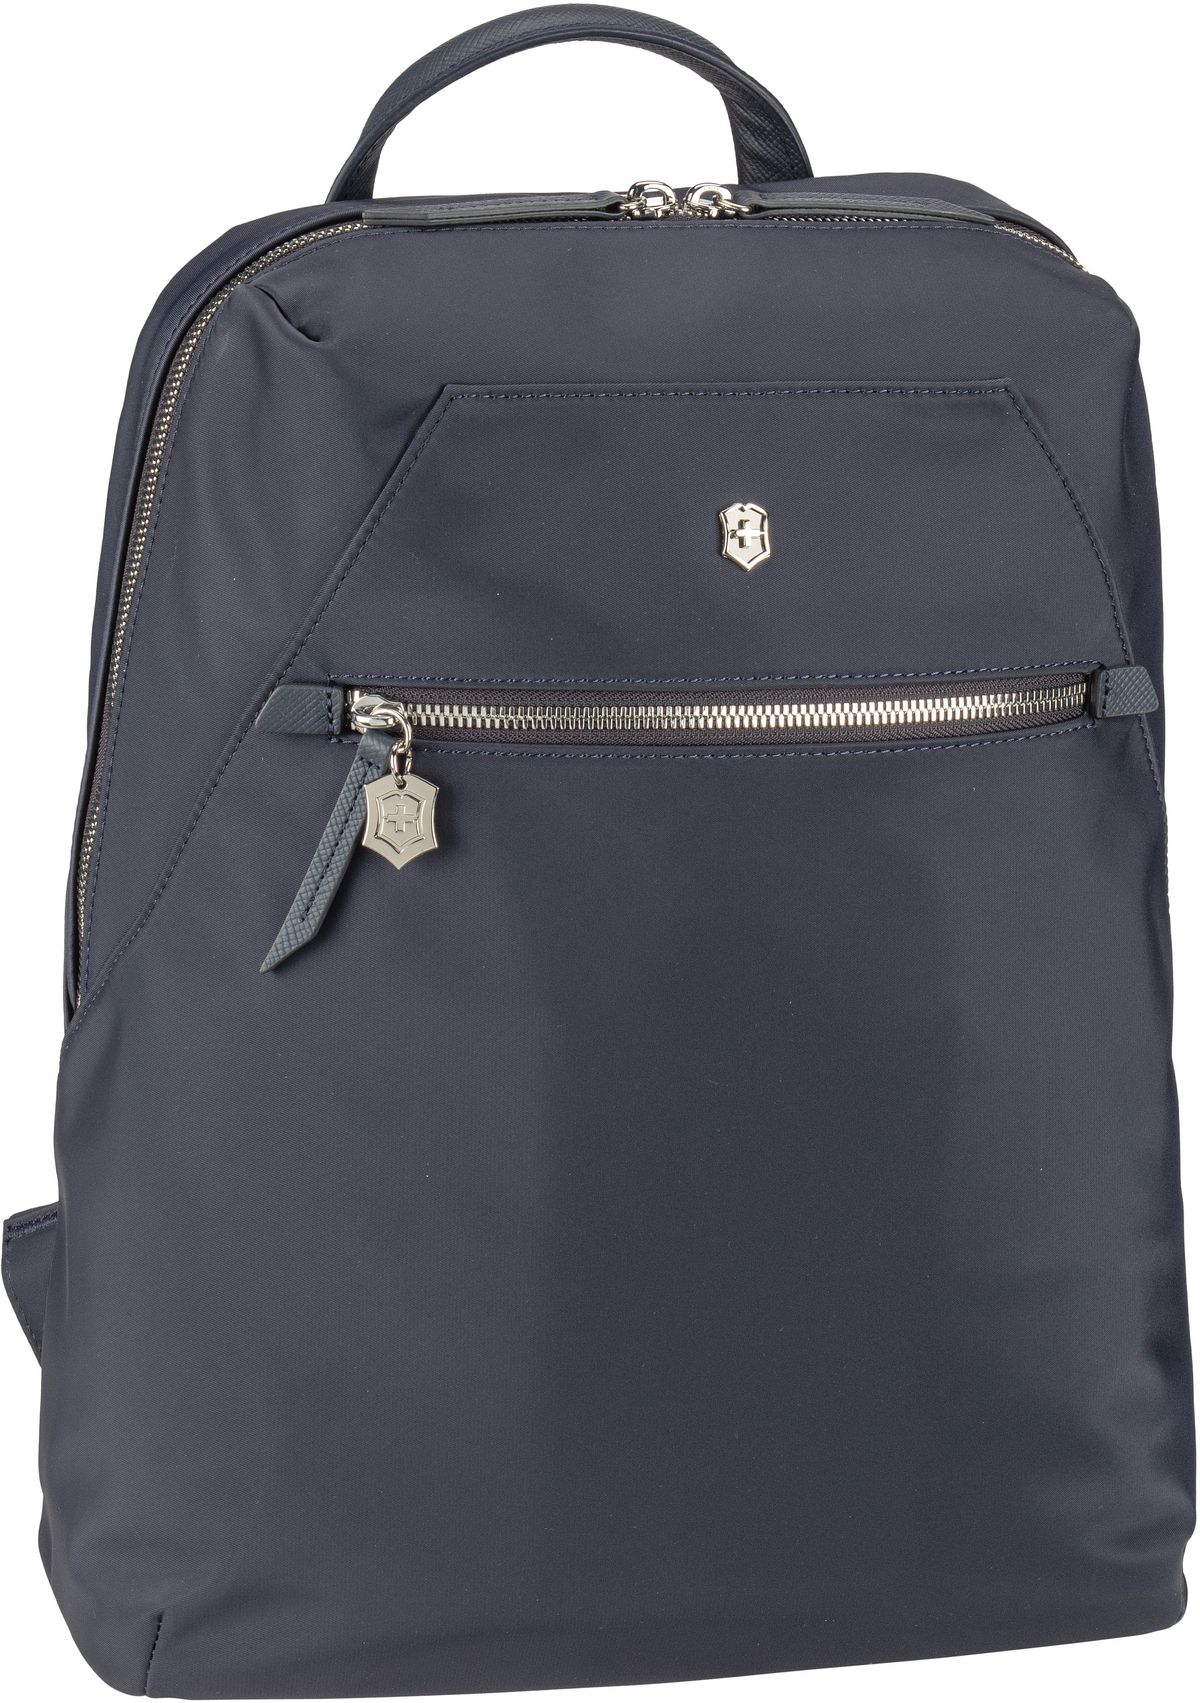 Victorinox Victoria Signature Compact Backpack - Midnight Blue